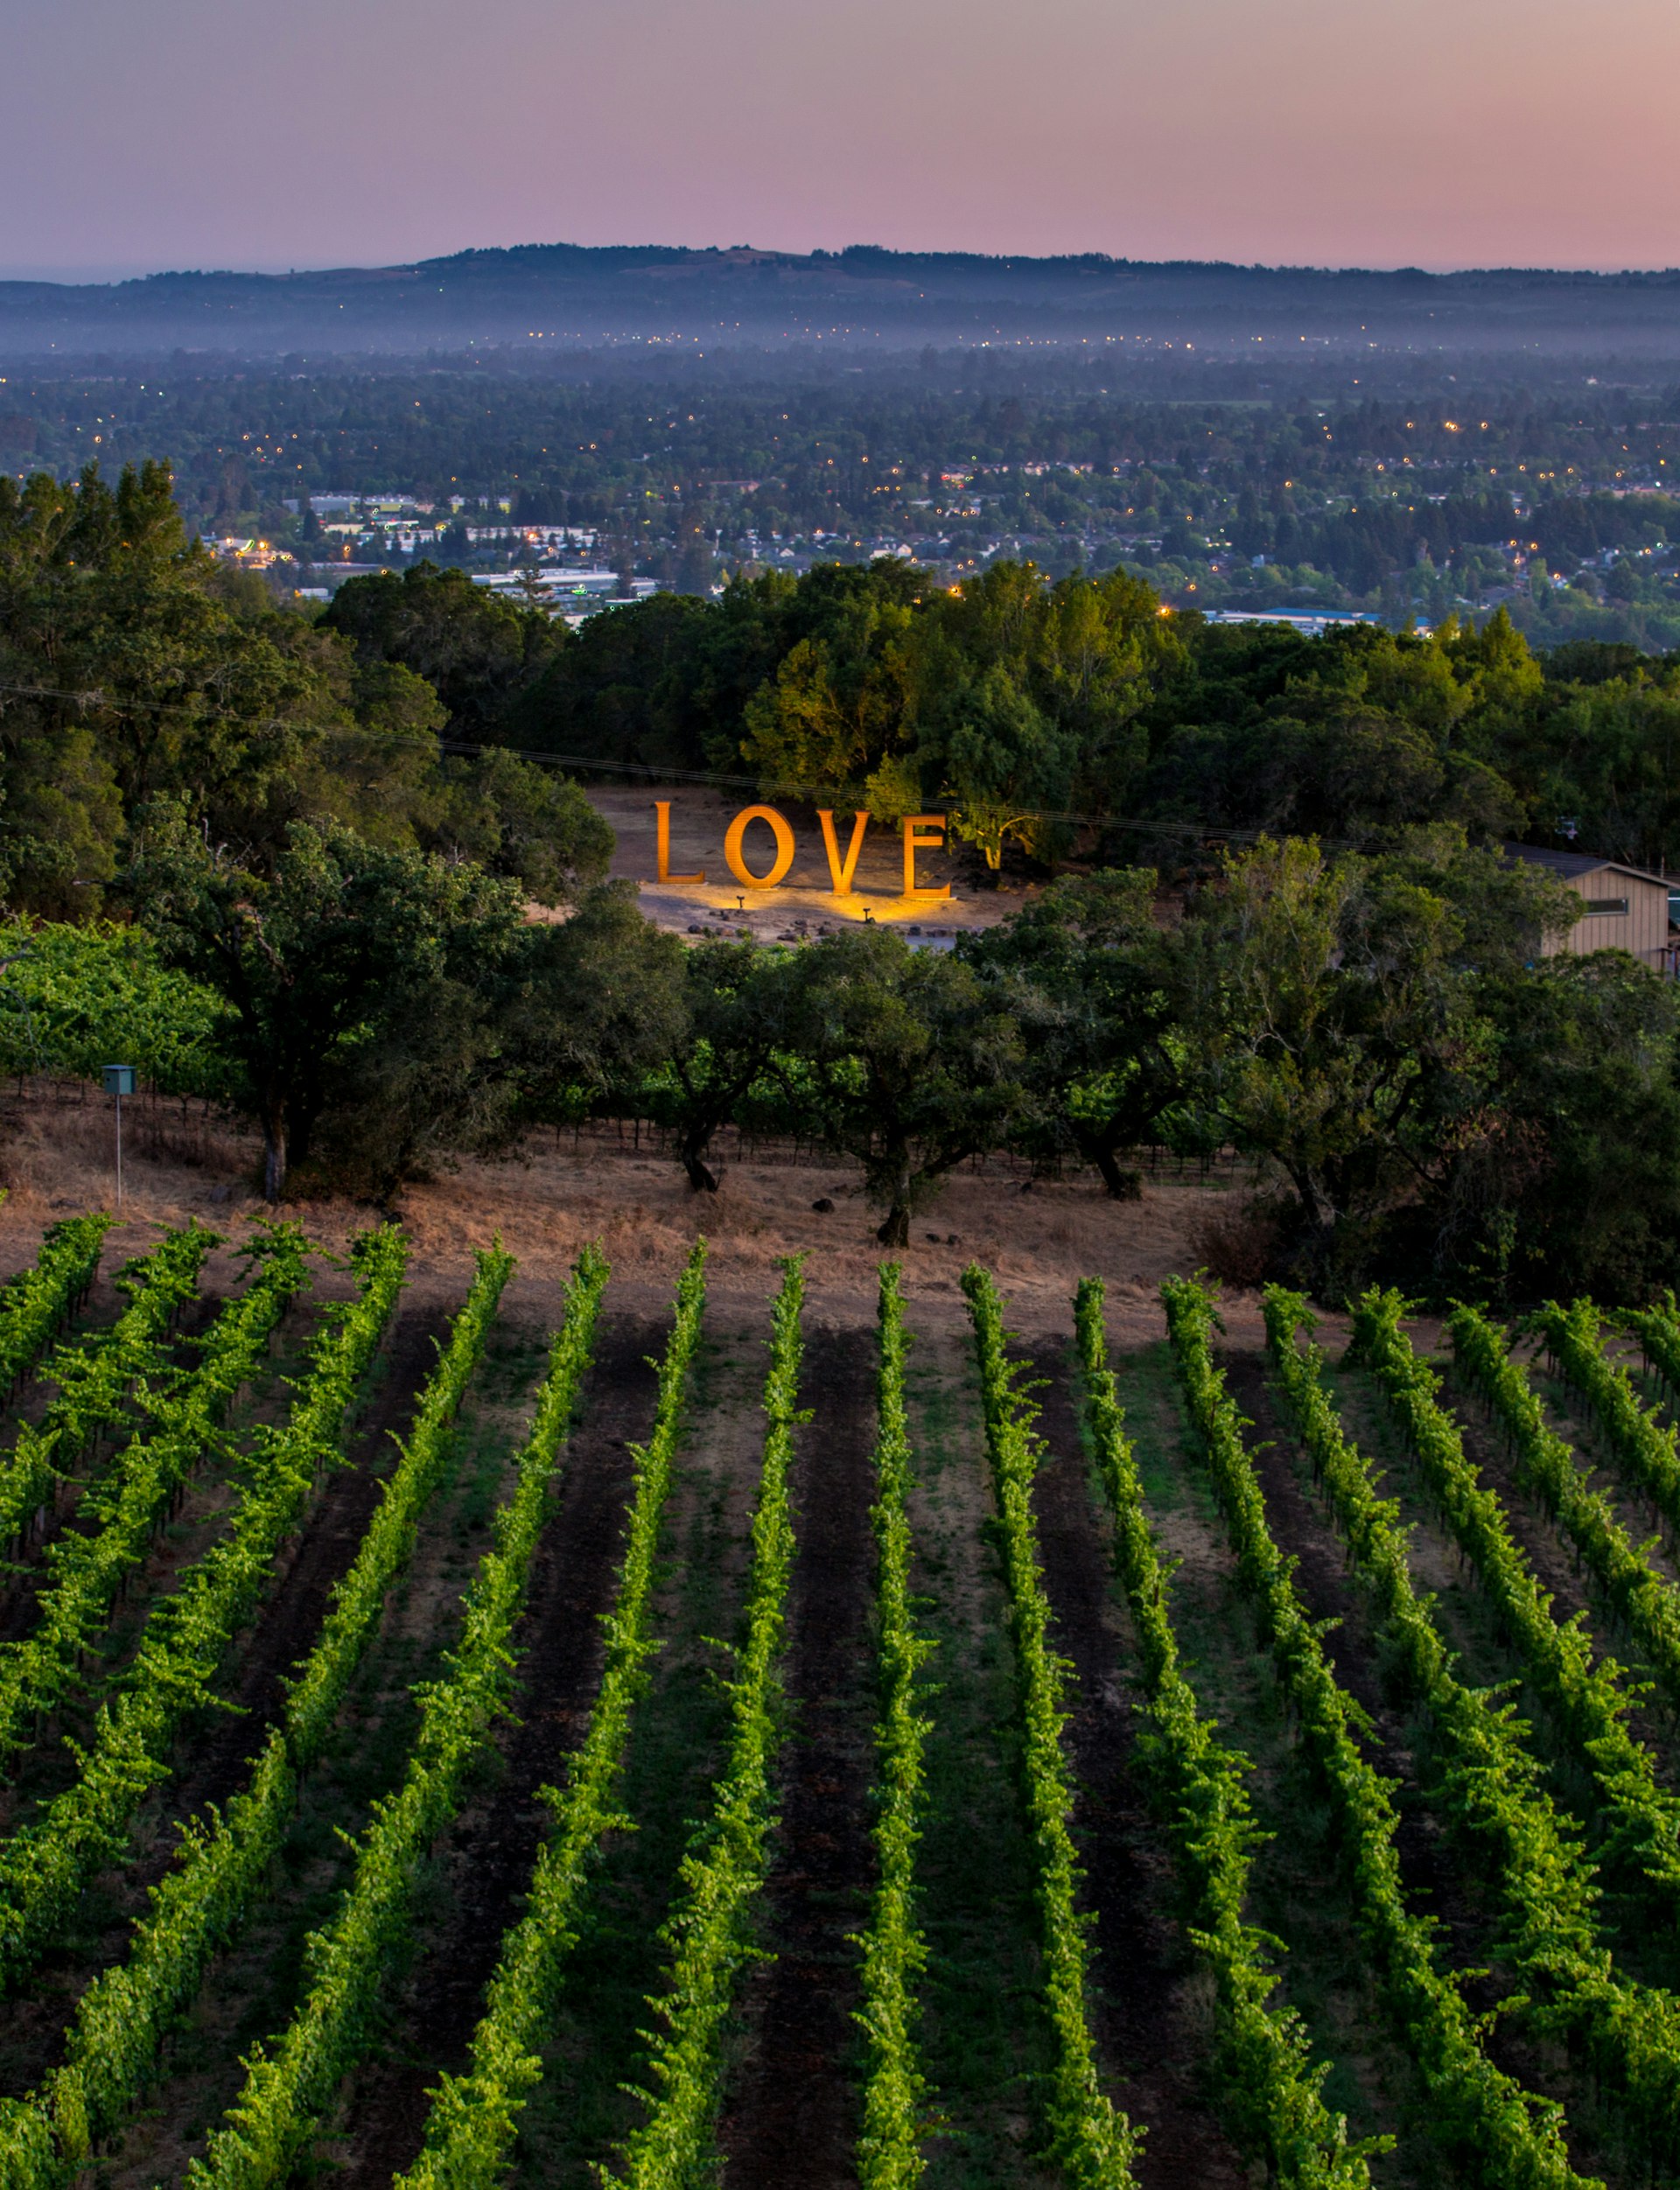 A metal sculpture of the word LOVE is viewed in a vinyard at Paradise Ridge Winery in Santa Rosa, California